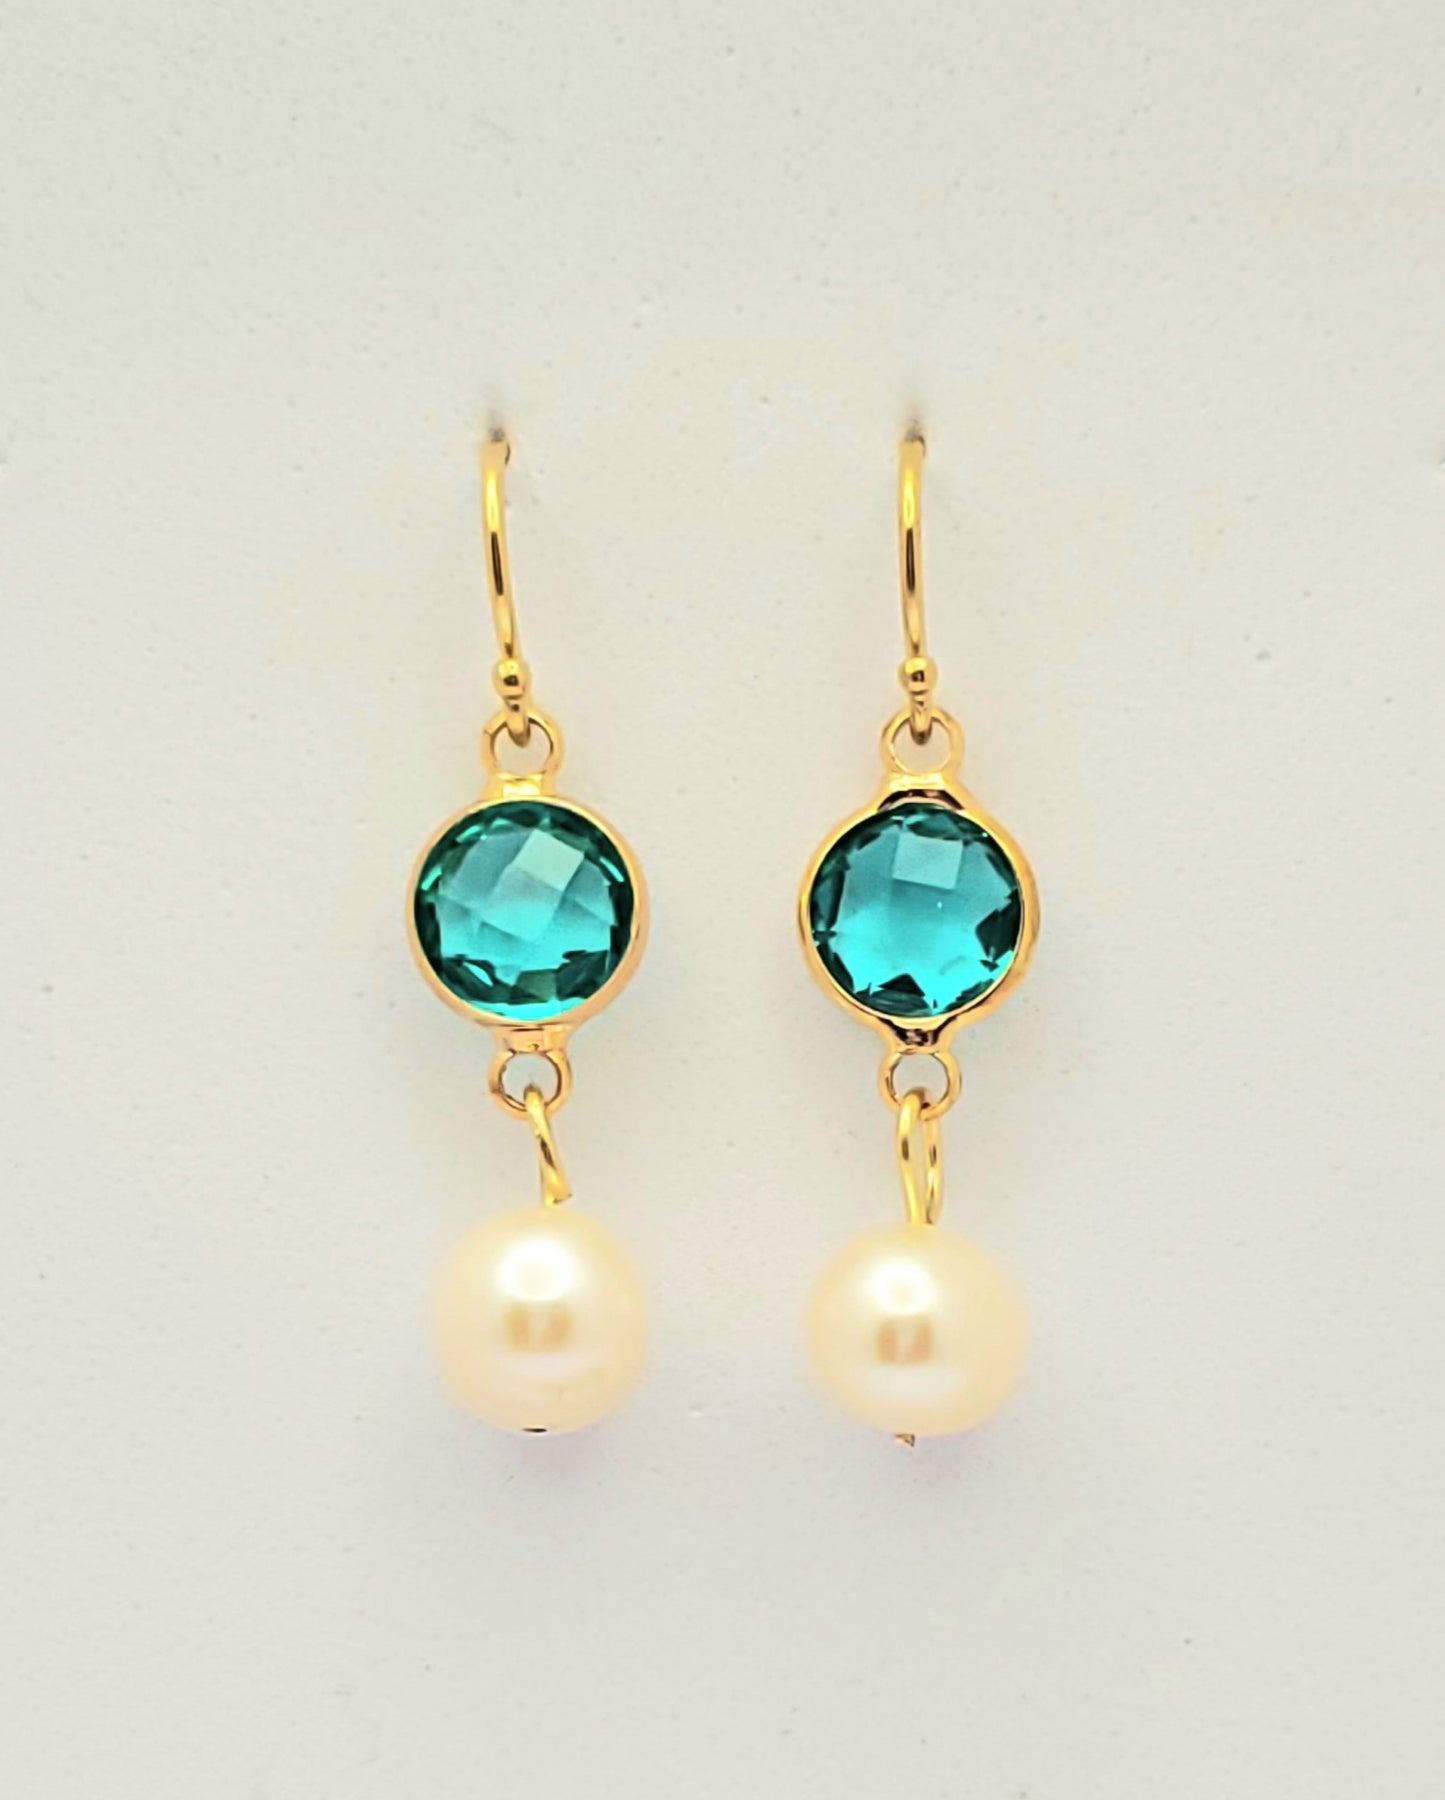 Austrian Crystal and Baroque Pearl Drop Earrings